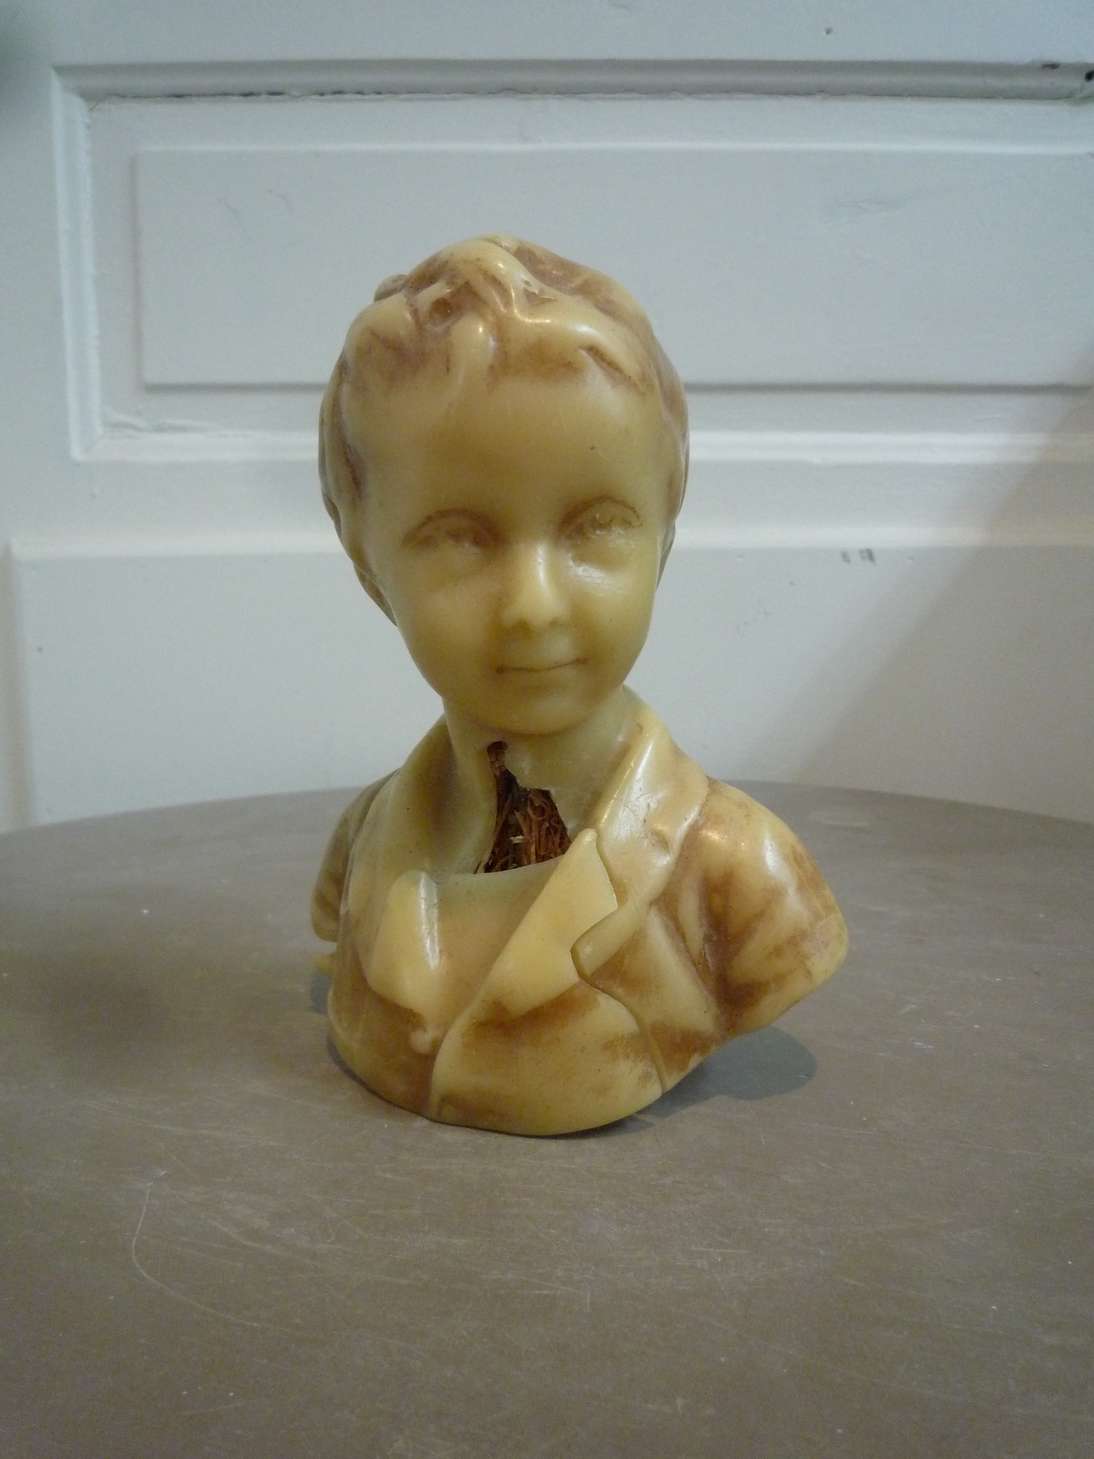 Alexandre-brongniart-buste-cire-sculpture-enfant-louise-houdon-sèvres-art-restauration-restaurarte.jpg